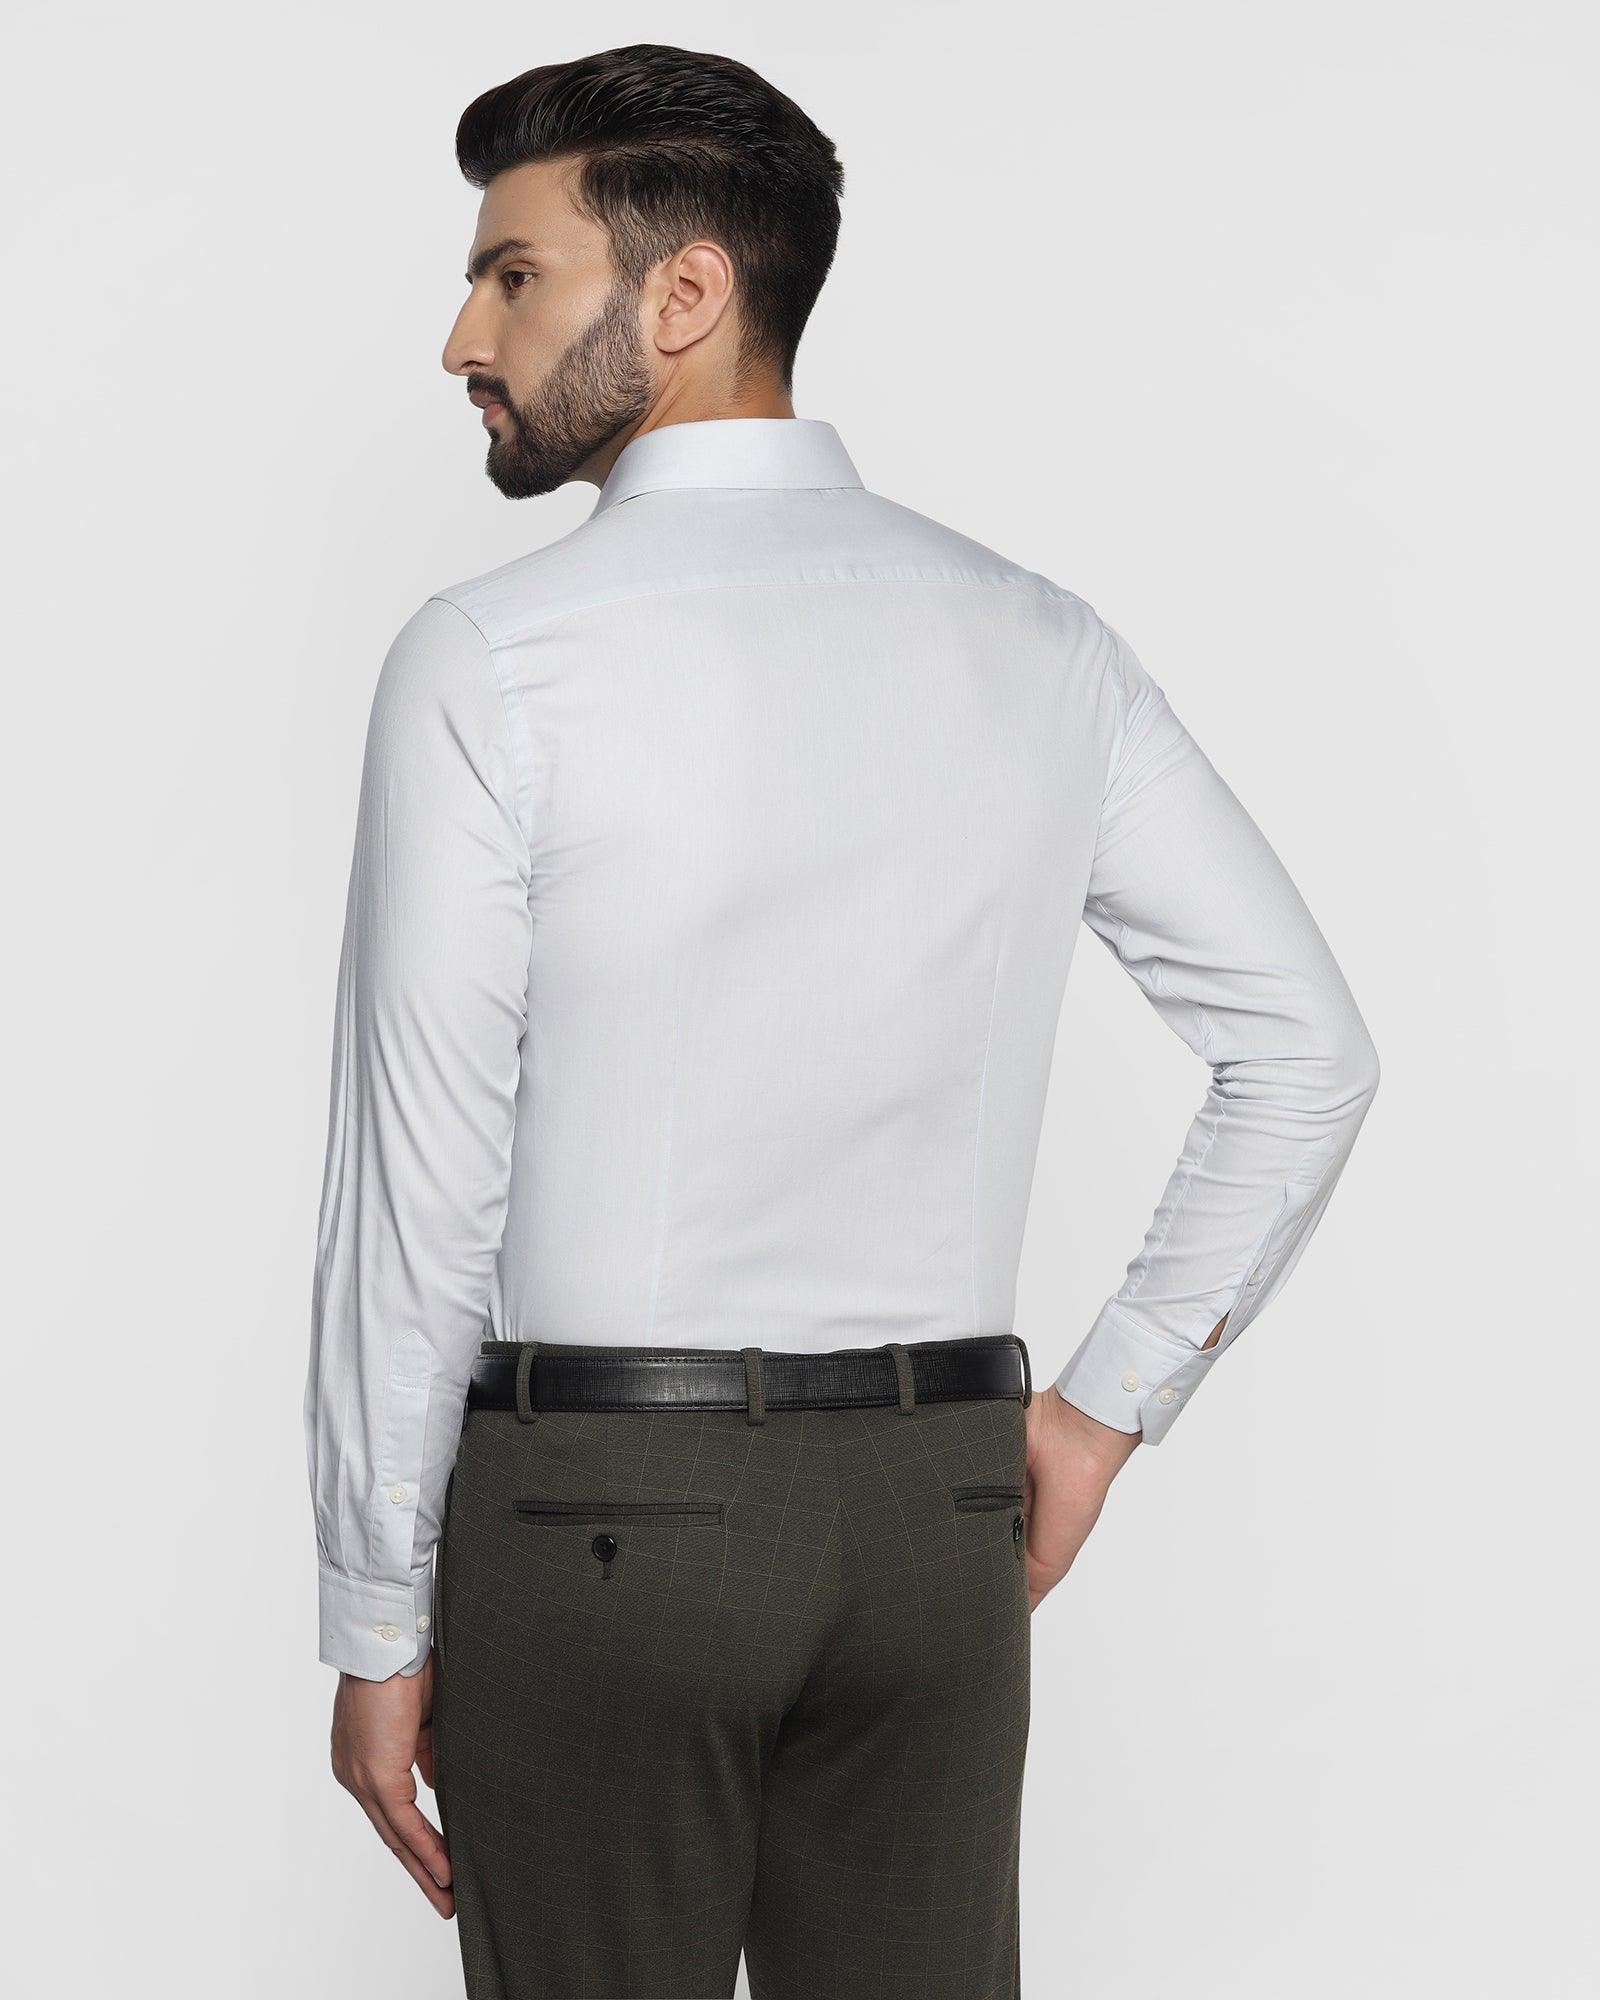 Formal Grey Solid Shirt - Retro